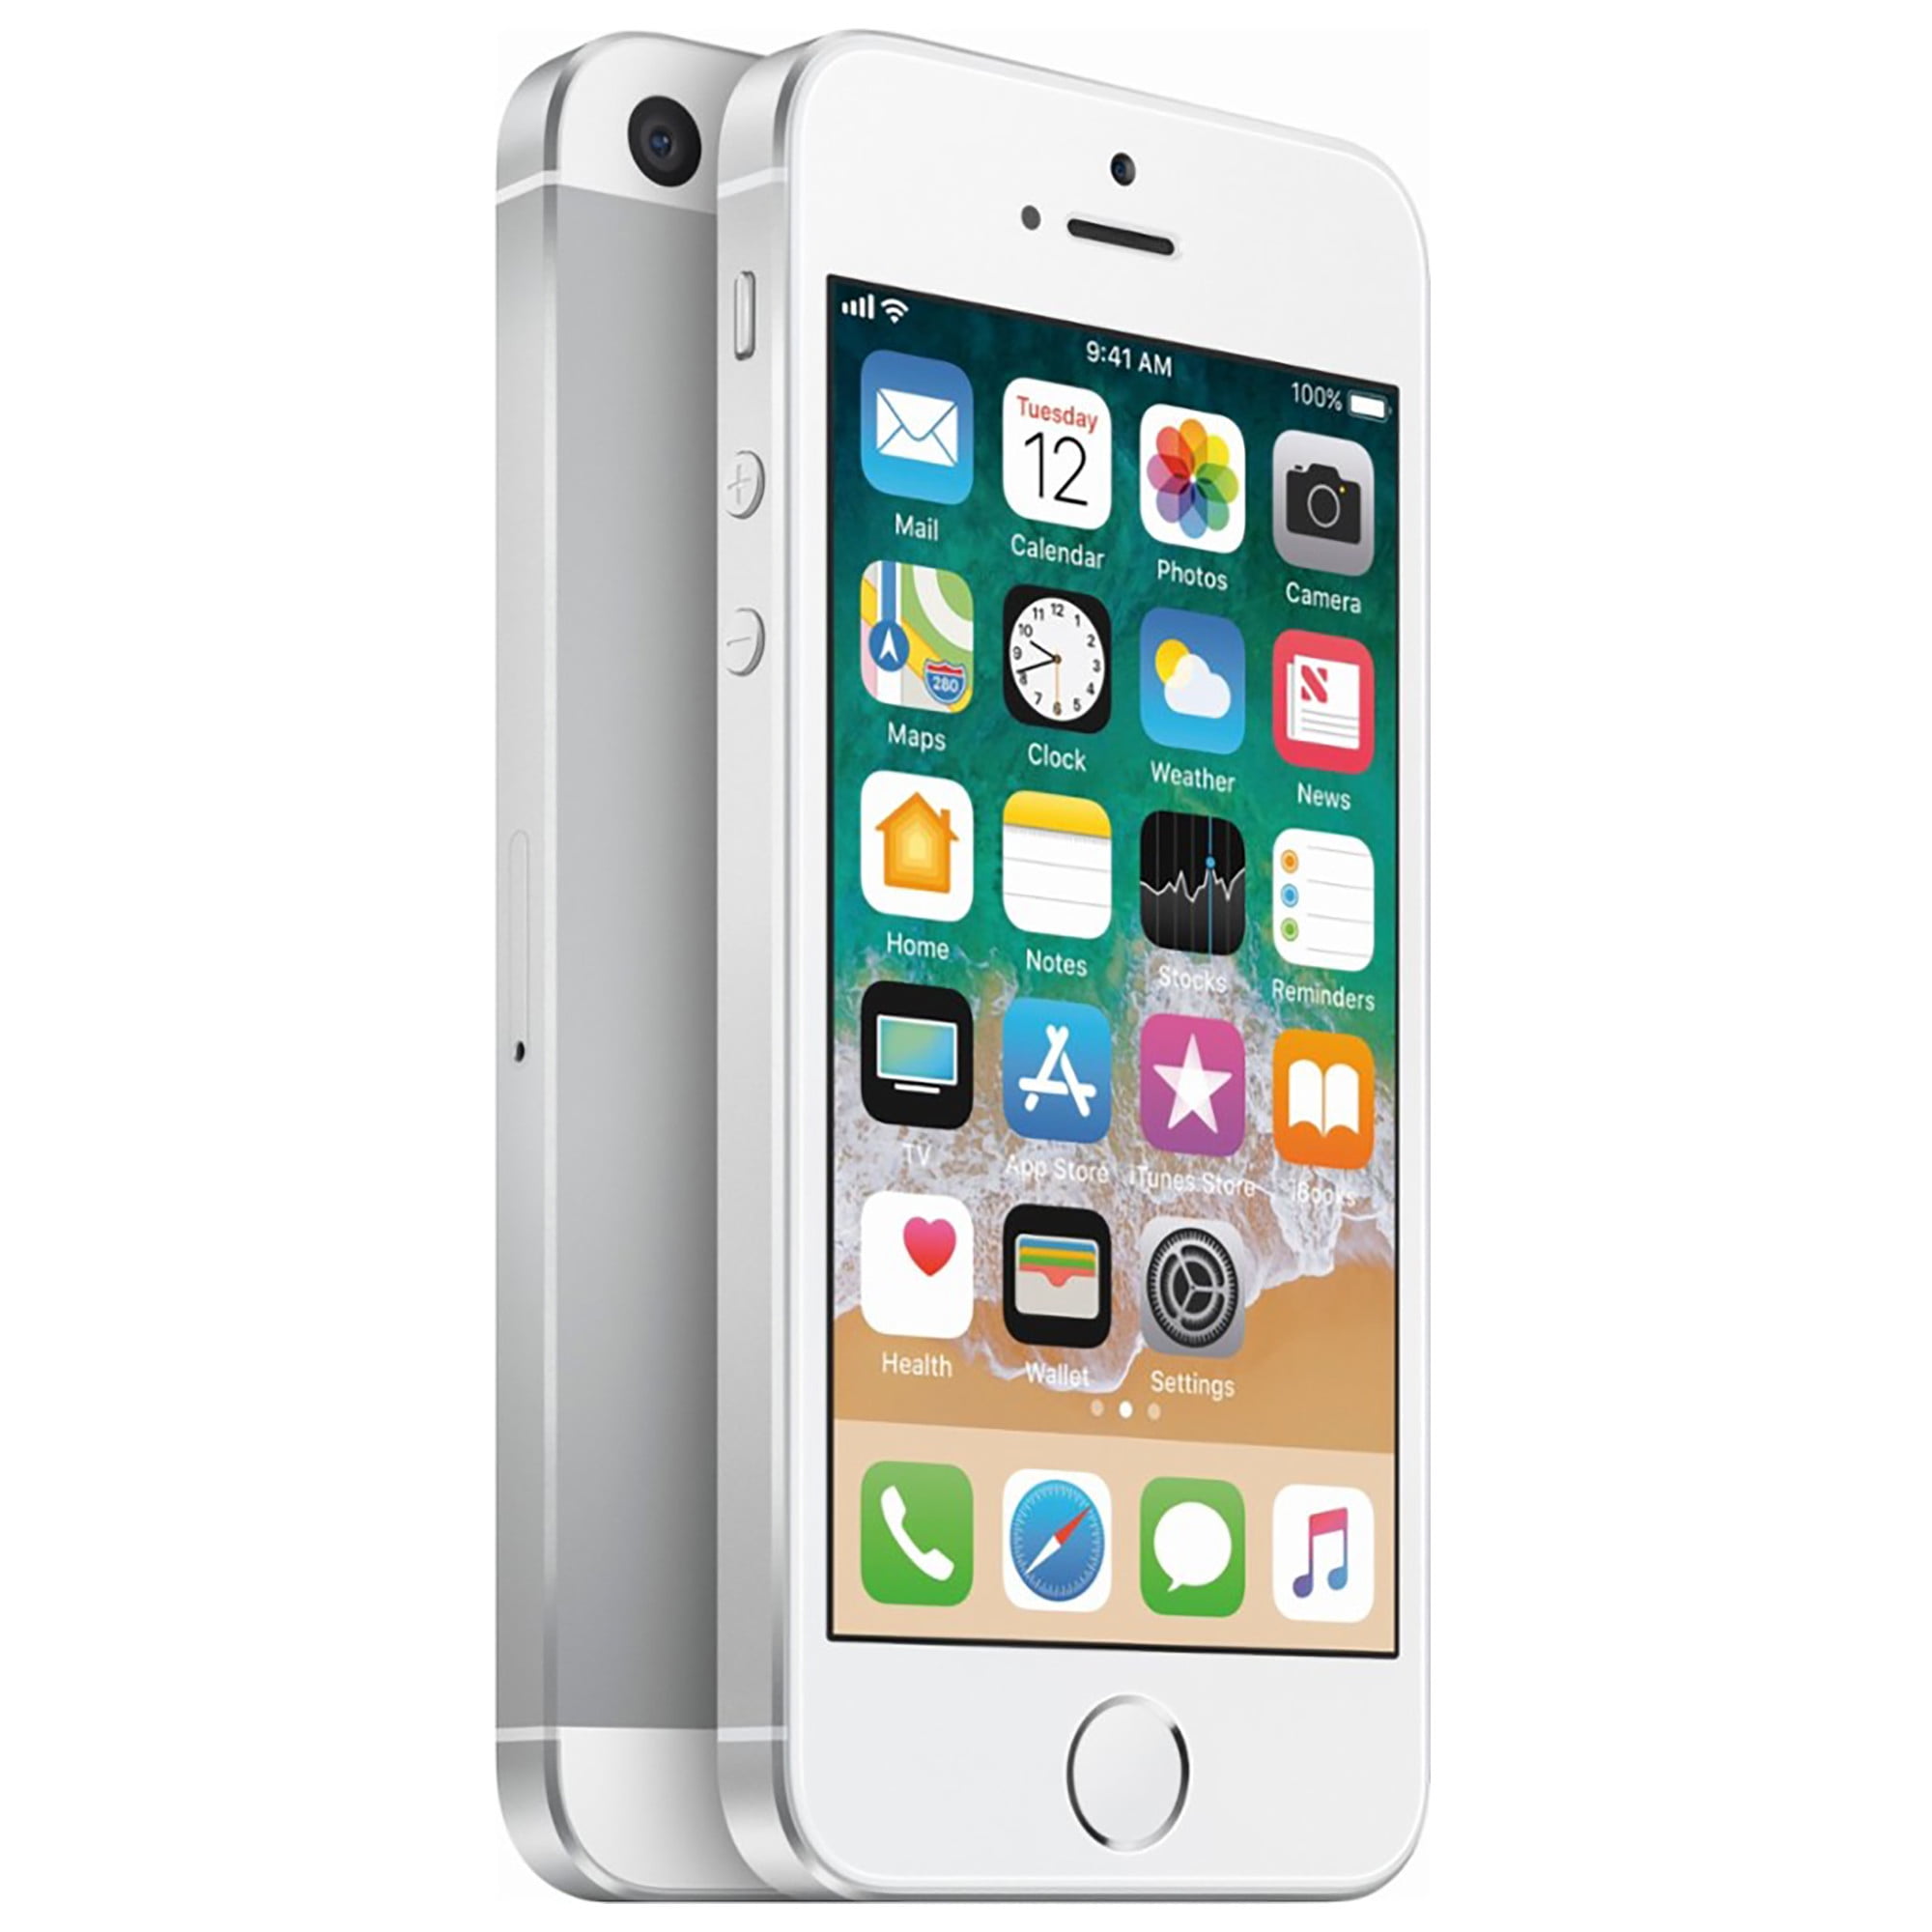 Apple iPhone SE 128GB Unlocked GSM Phone w/ 12MP Camera - Silver